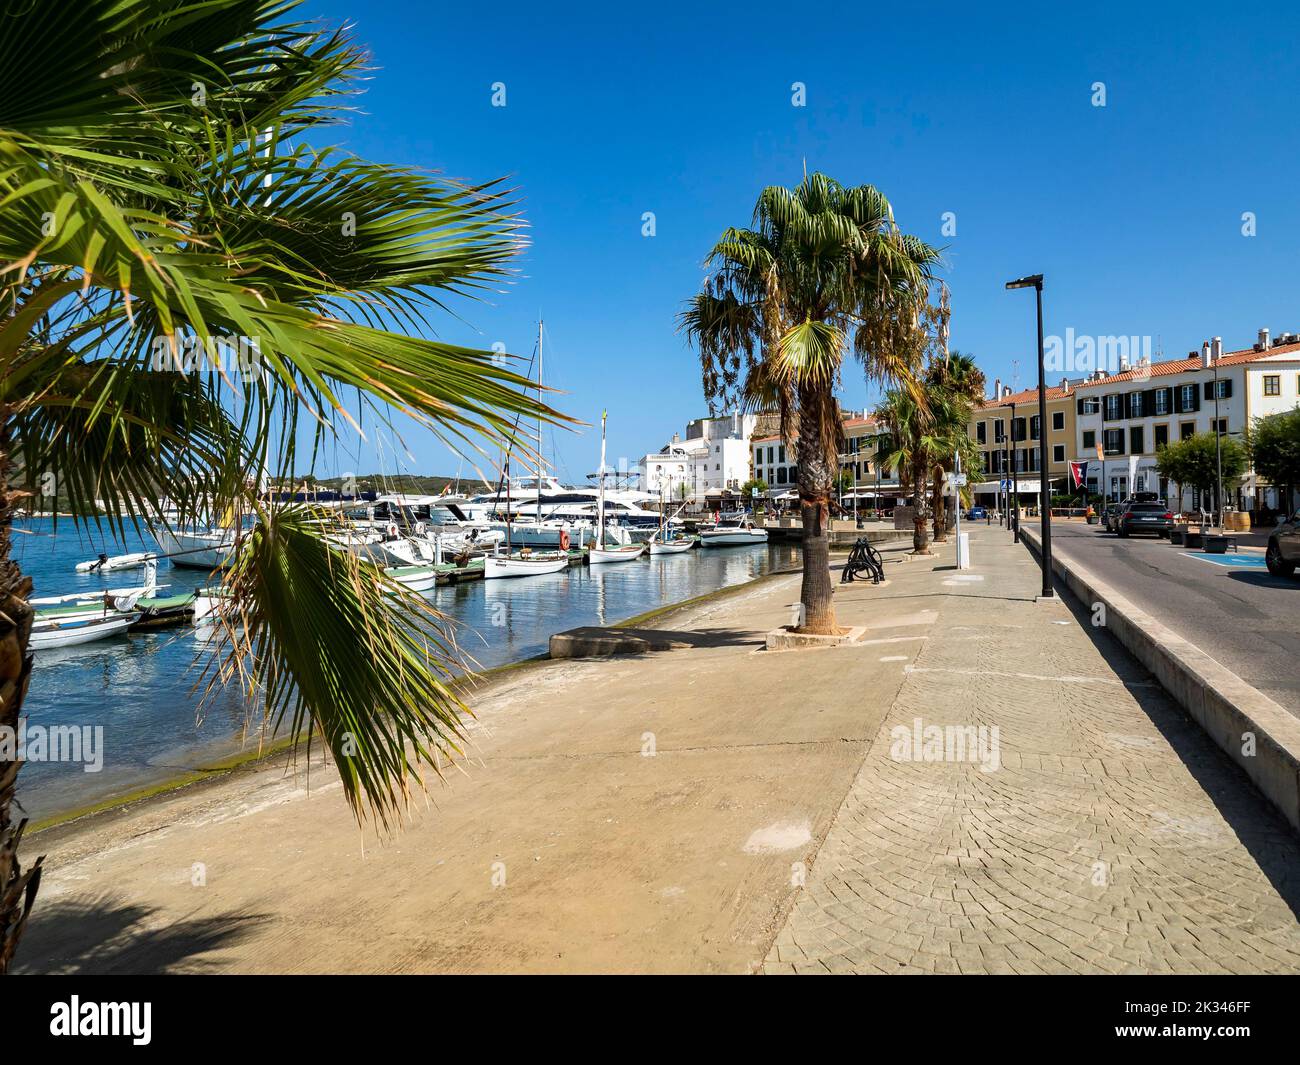 Port de Mao, Moll de Llevant with restaurants and yachts, Mahon, Menorca, Balearic Islands, Spain Stock Photo